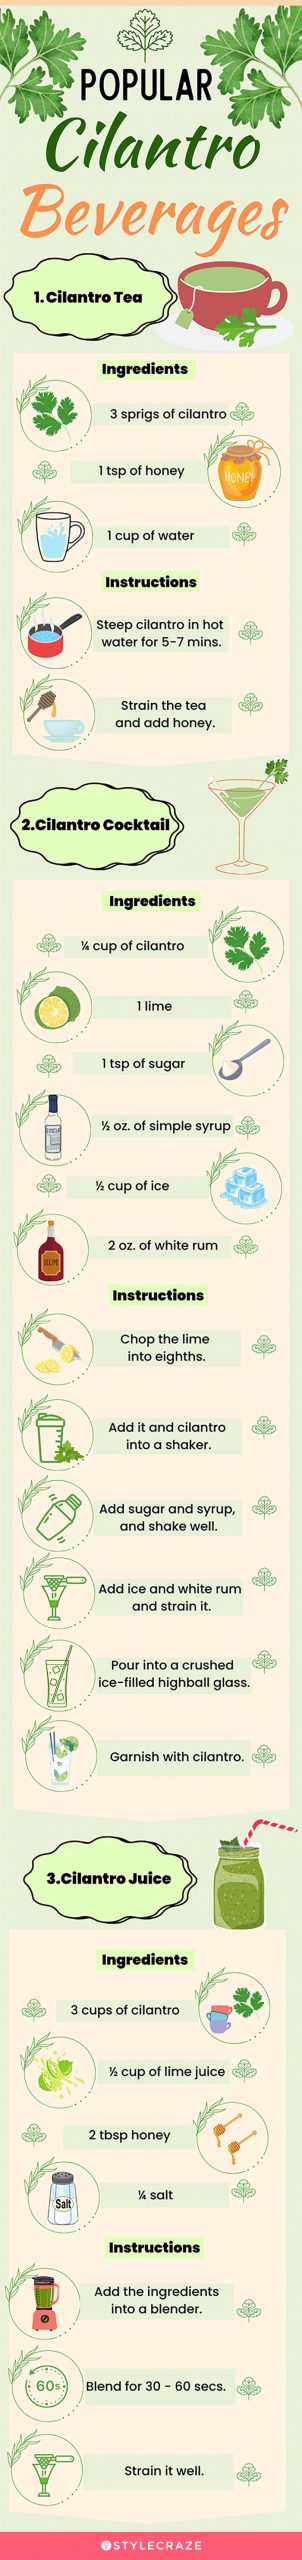 cilantro beverages (infographic)